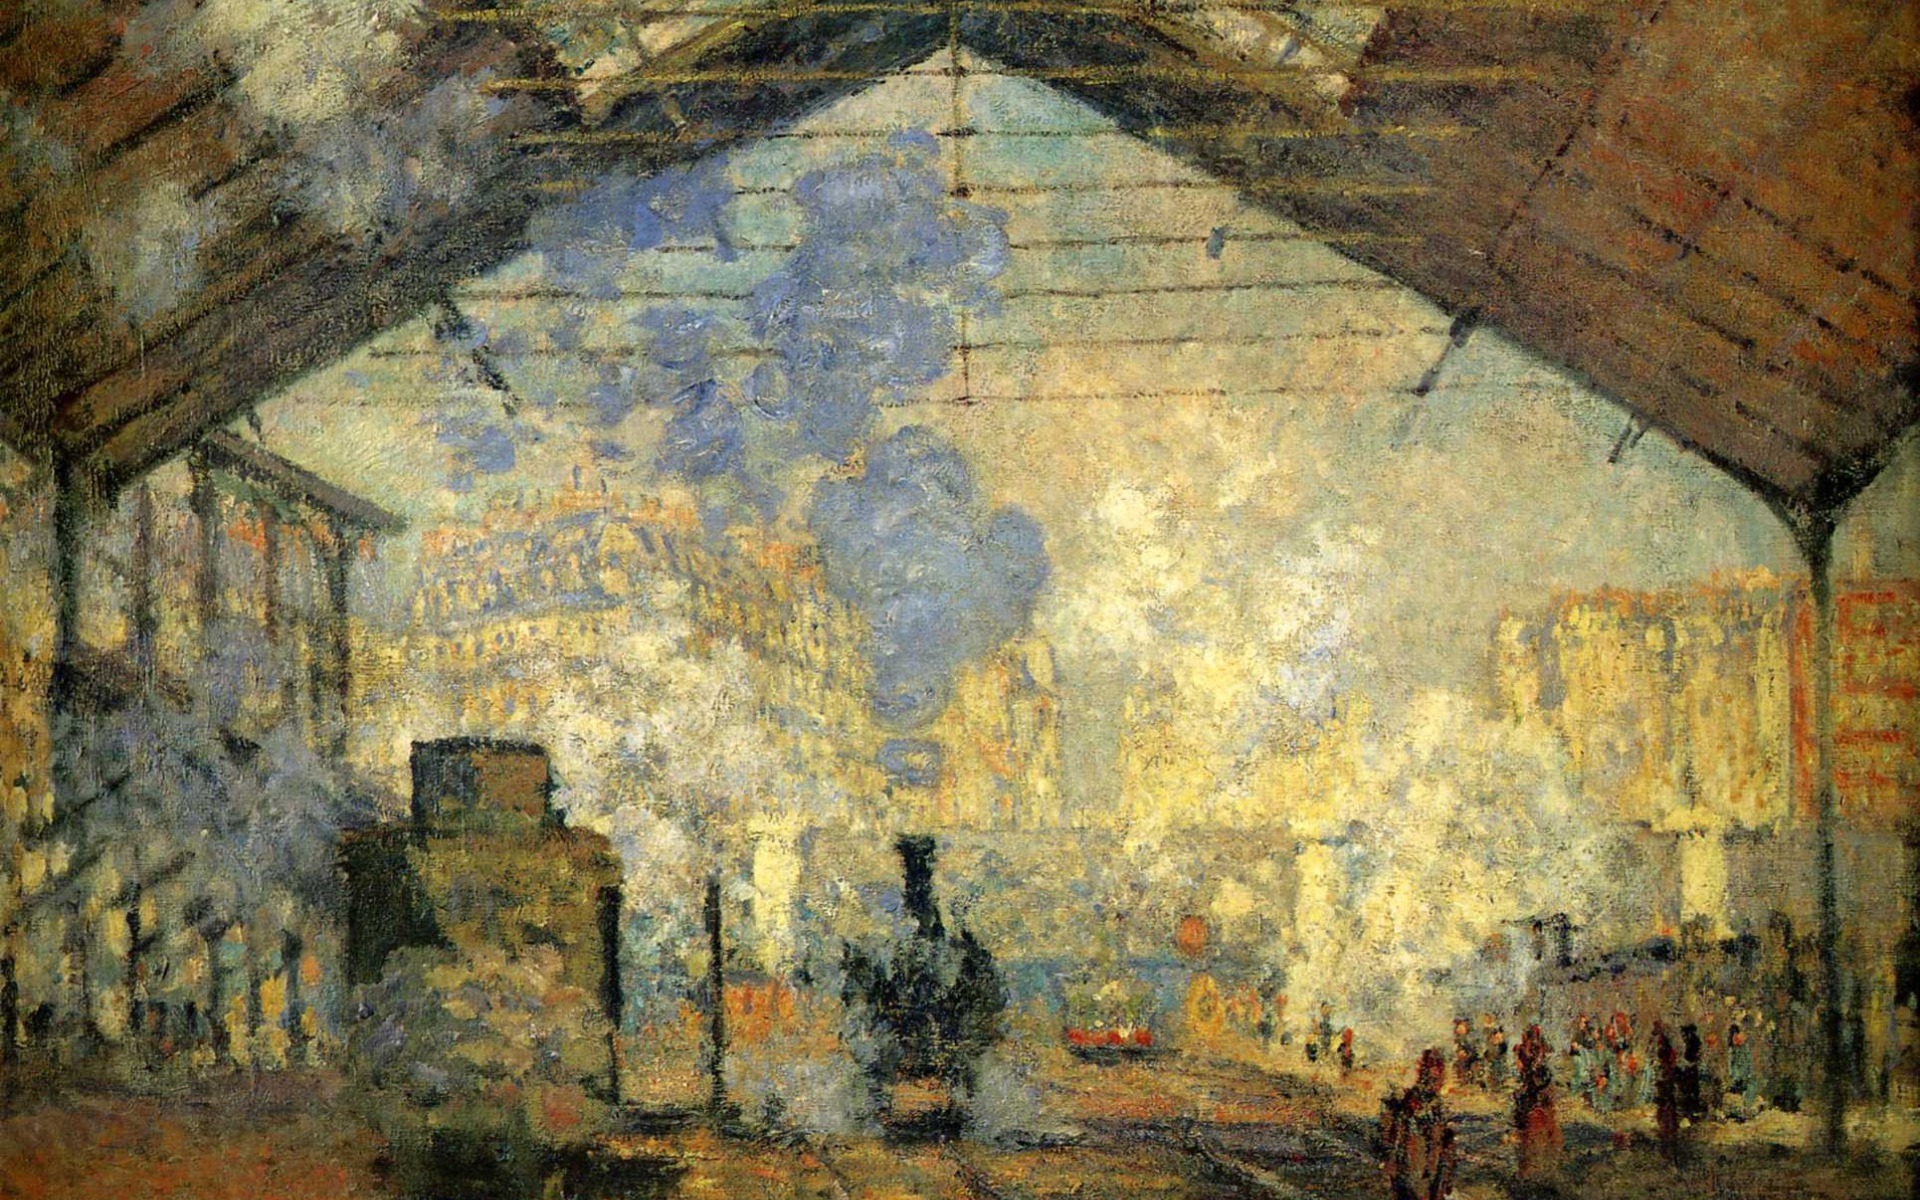 Painting Claude Monet - Train station